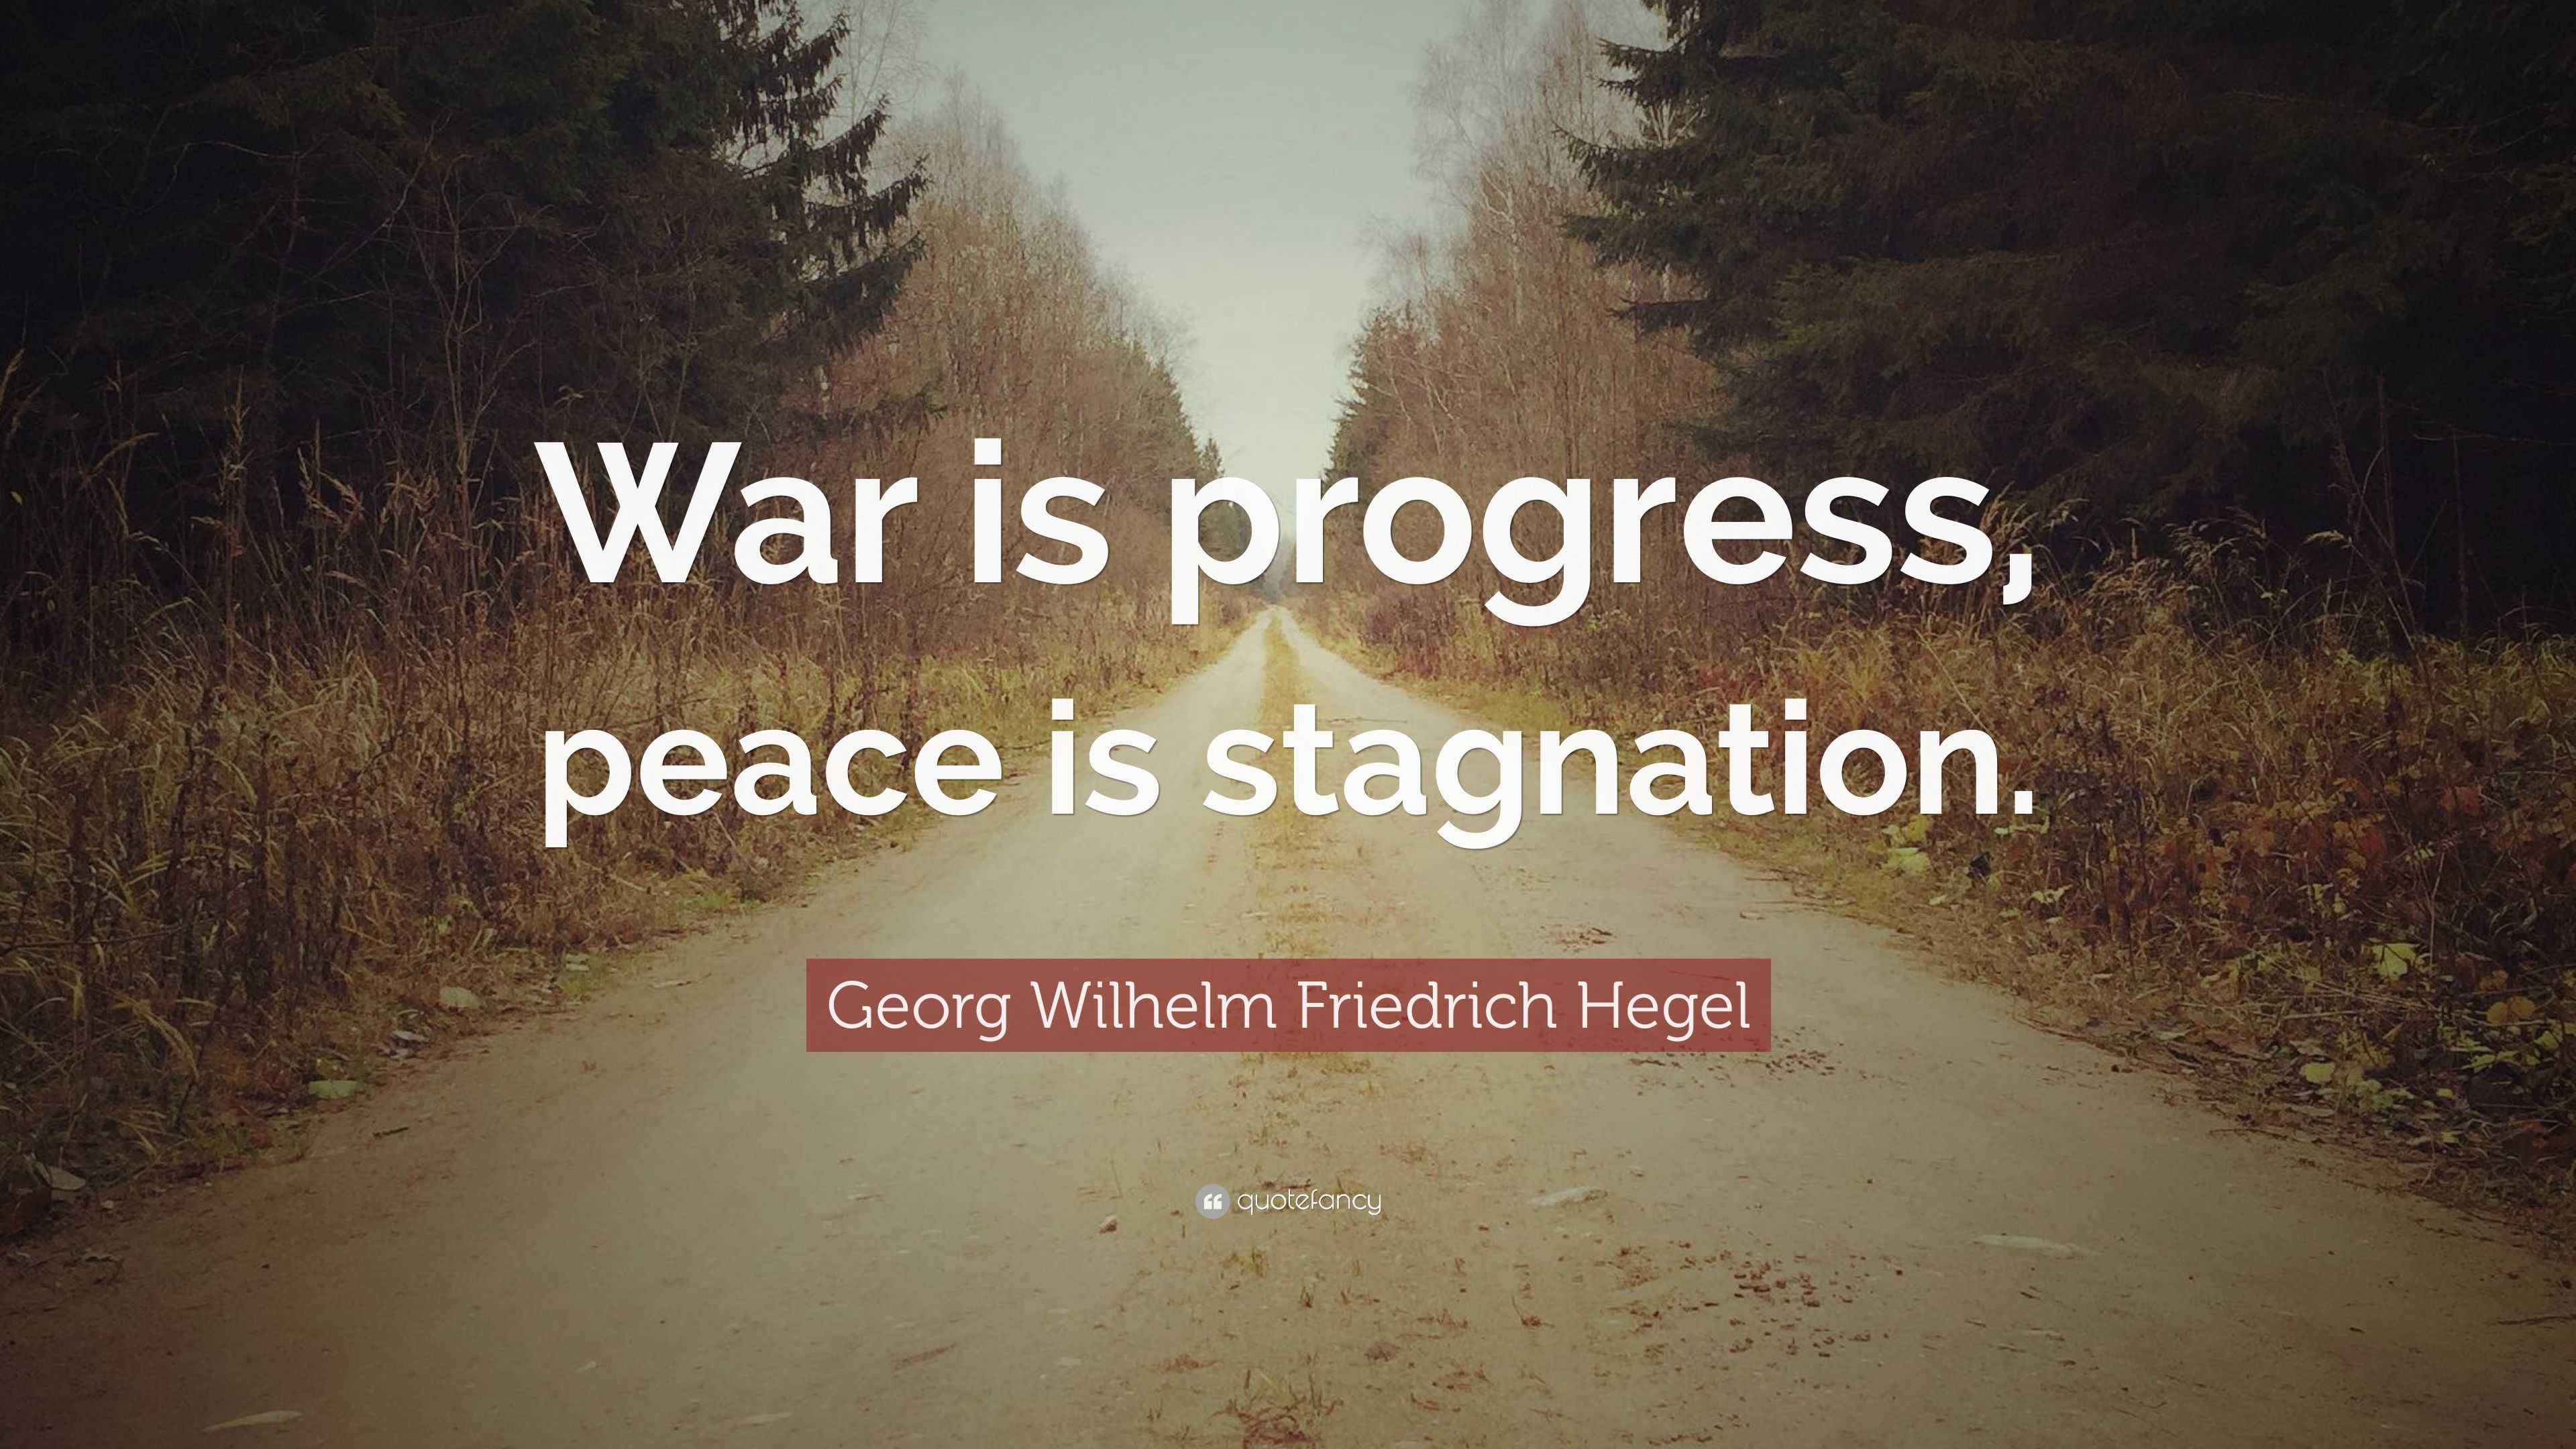 essay on war is progress peace is stagnation